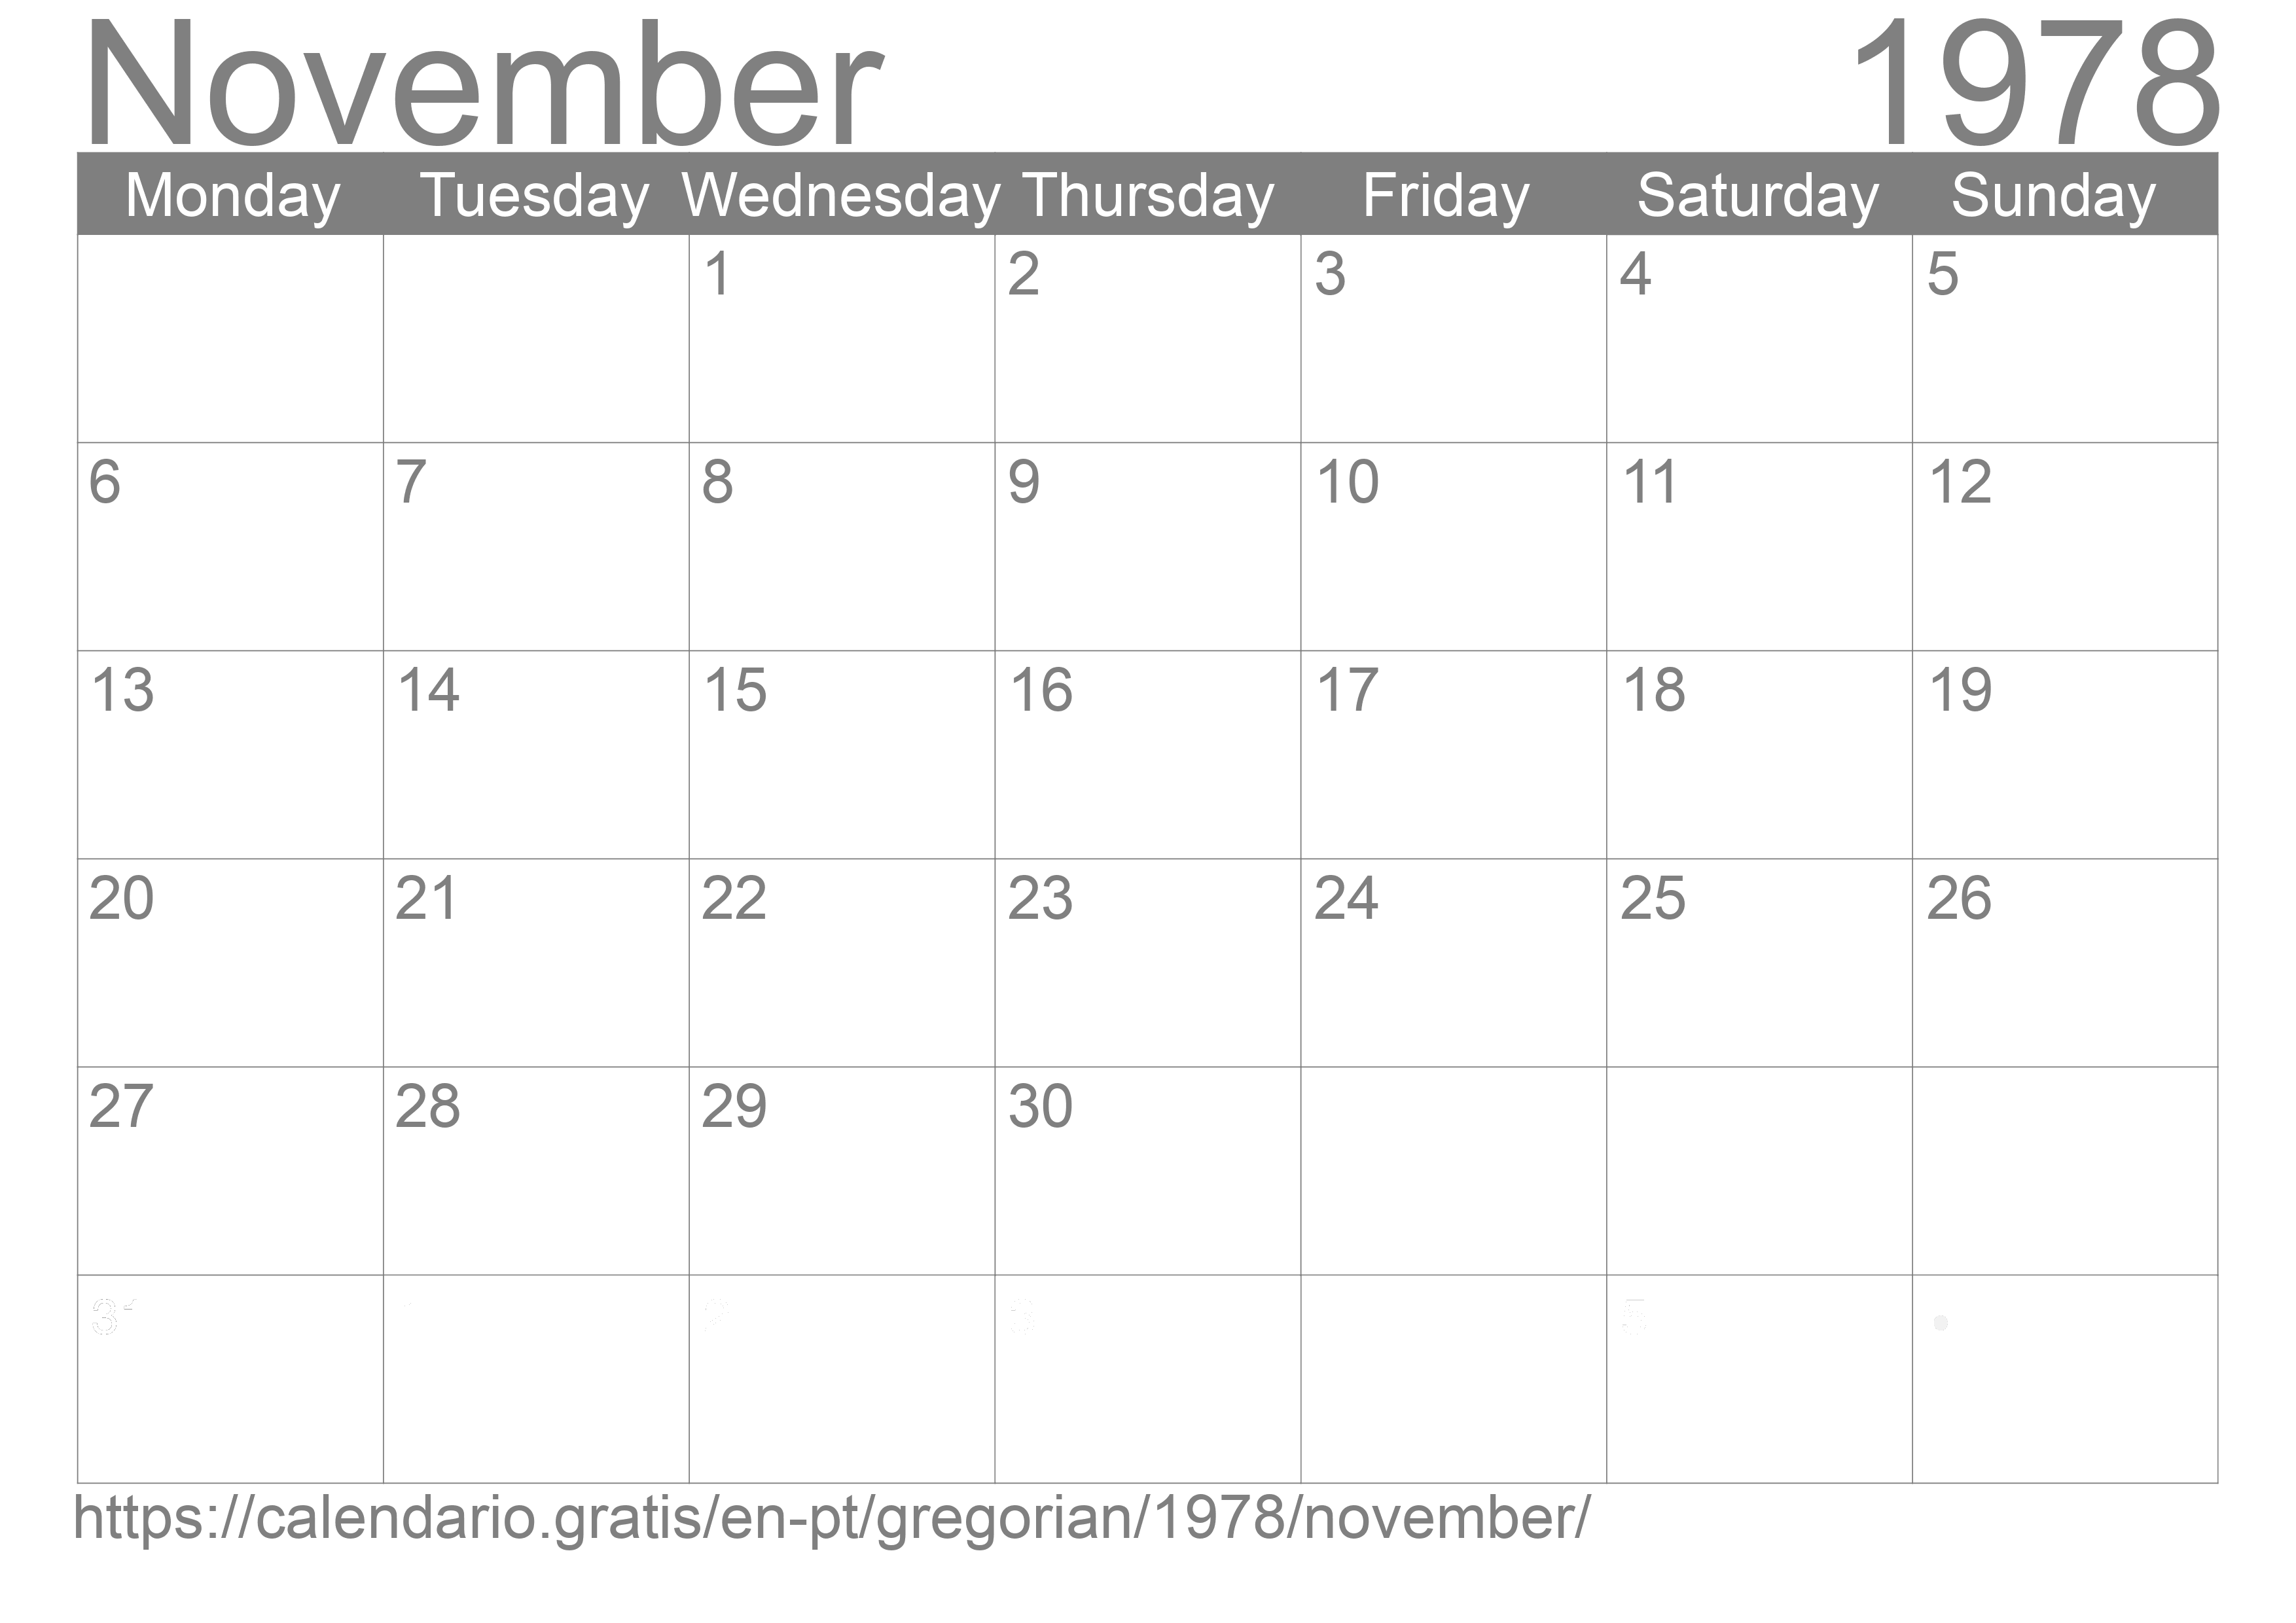 Calendar November 1978 to print